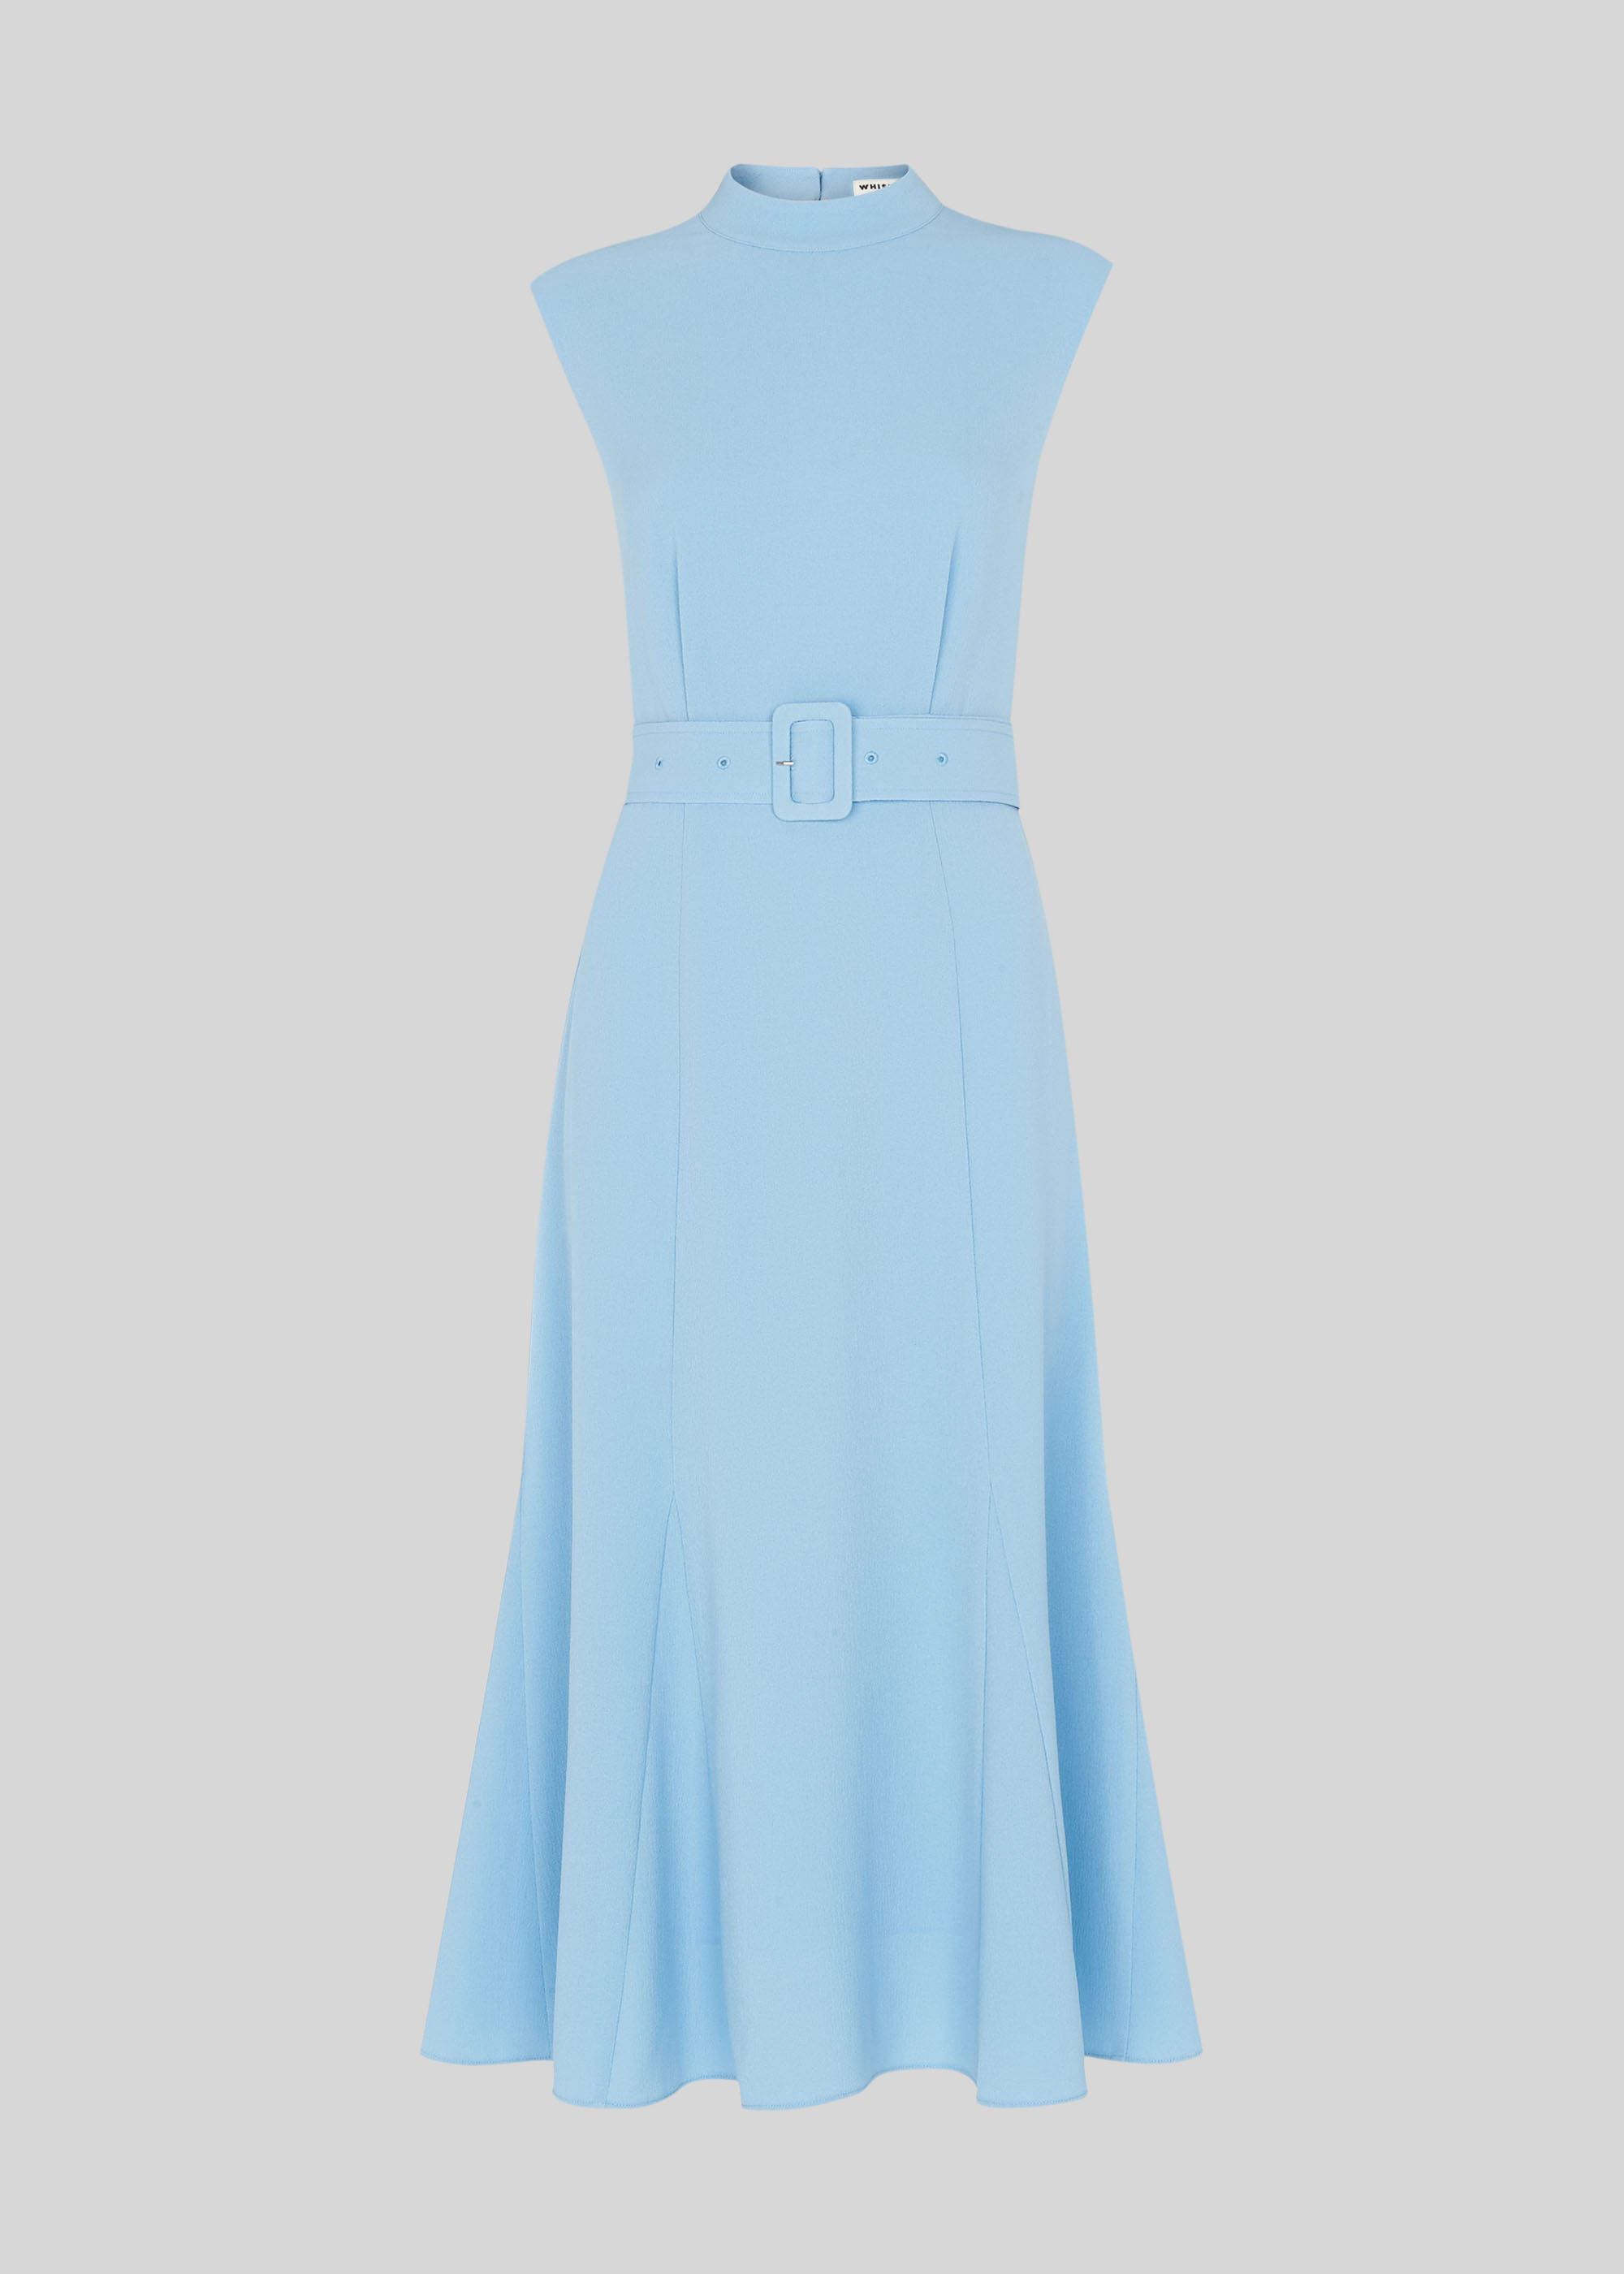 pale blue midi dress uk